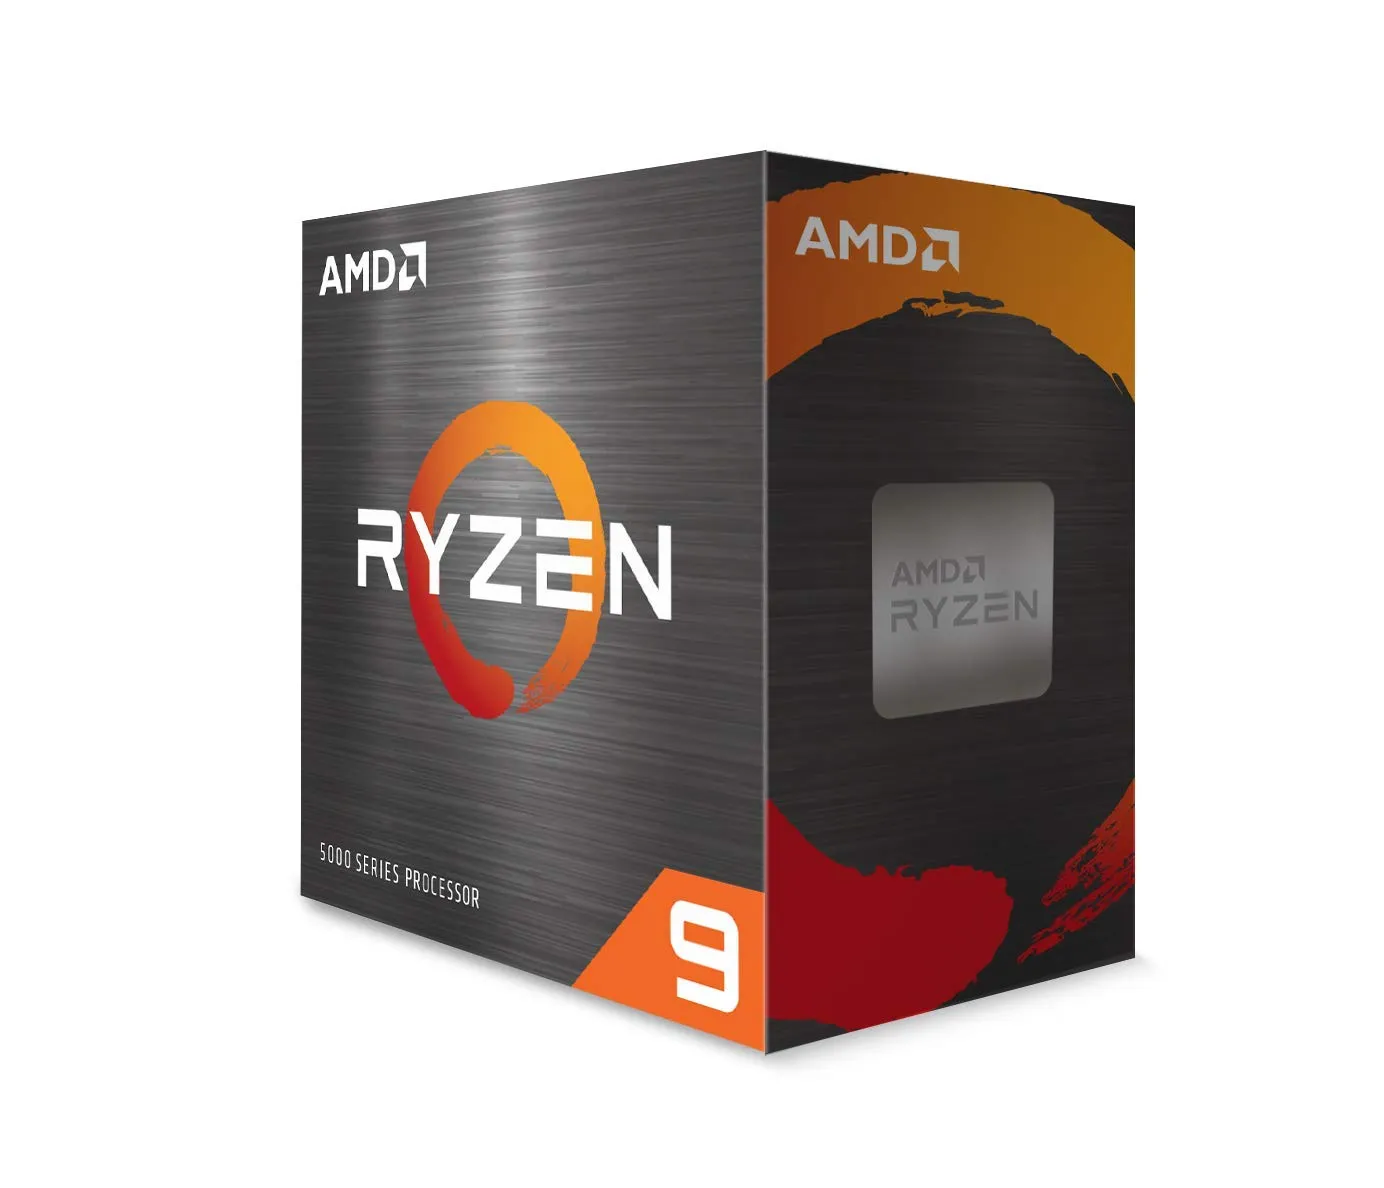 AMD 5000 Series Ryzen 9 5900X Desktop Processor 12 Cores 24 Threads